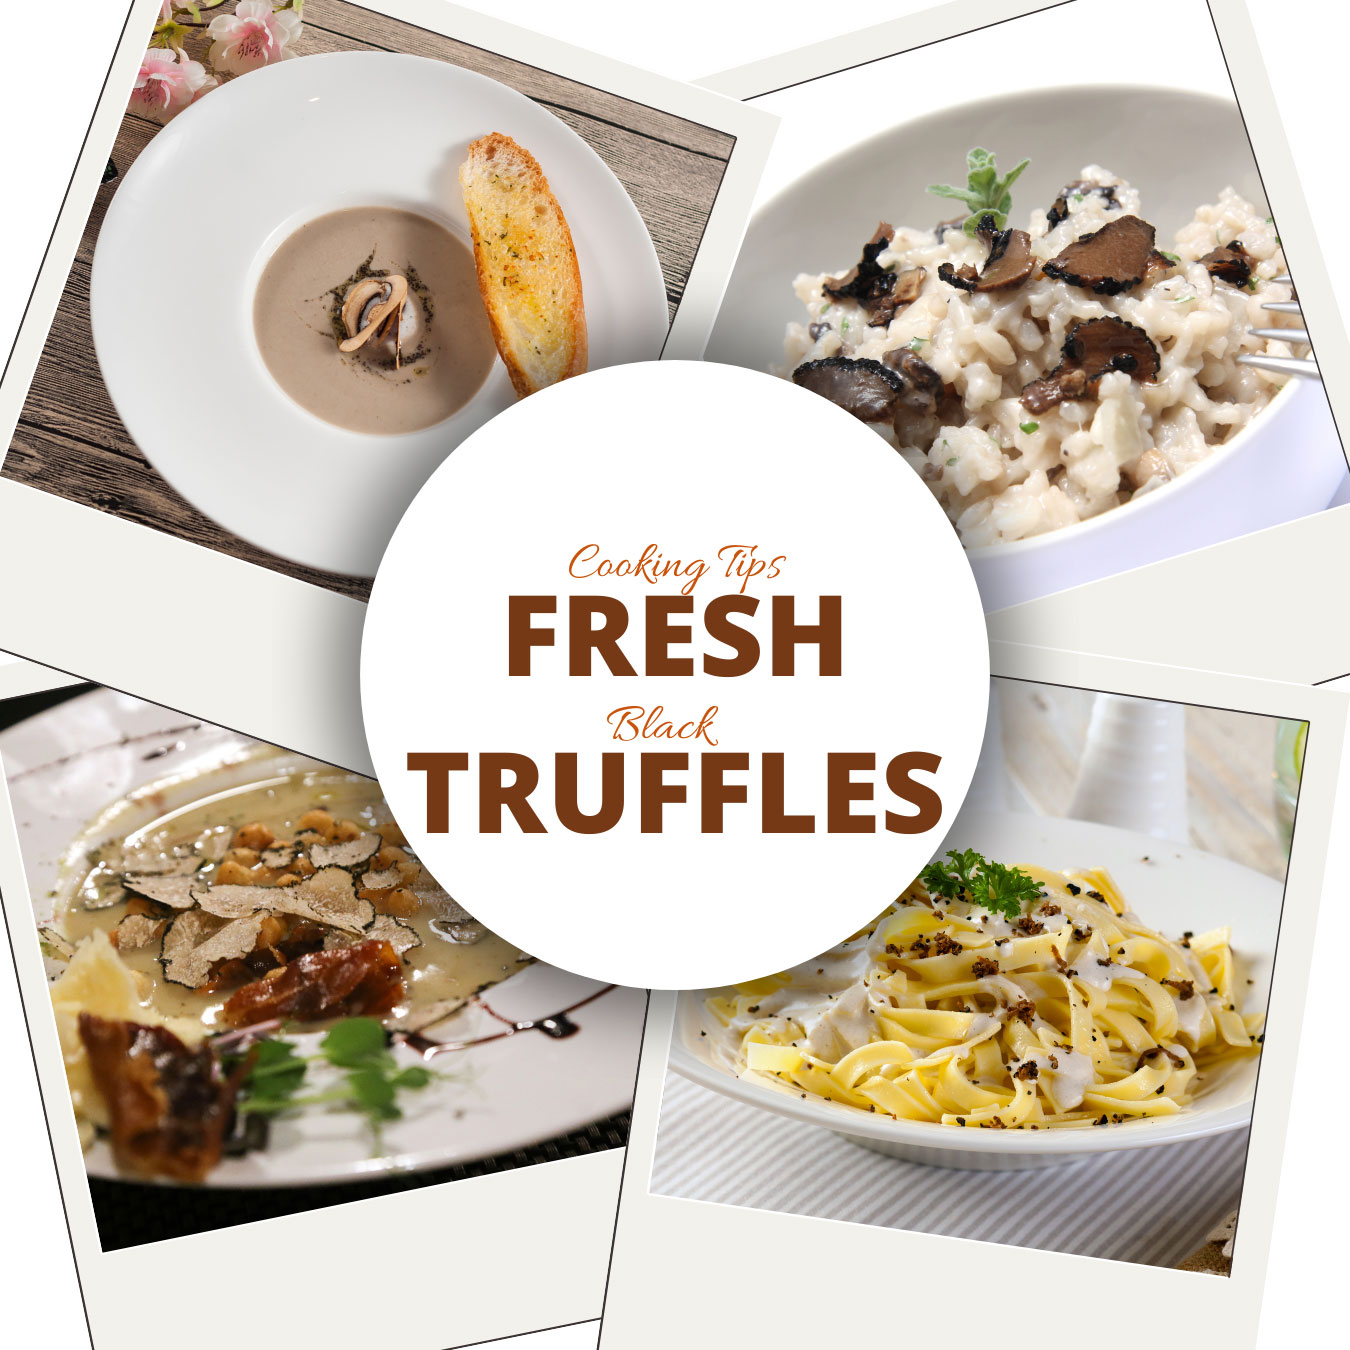 Types of truffles image